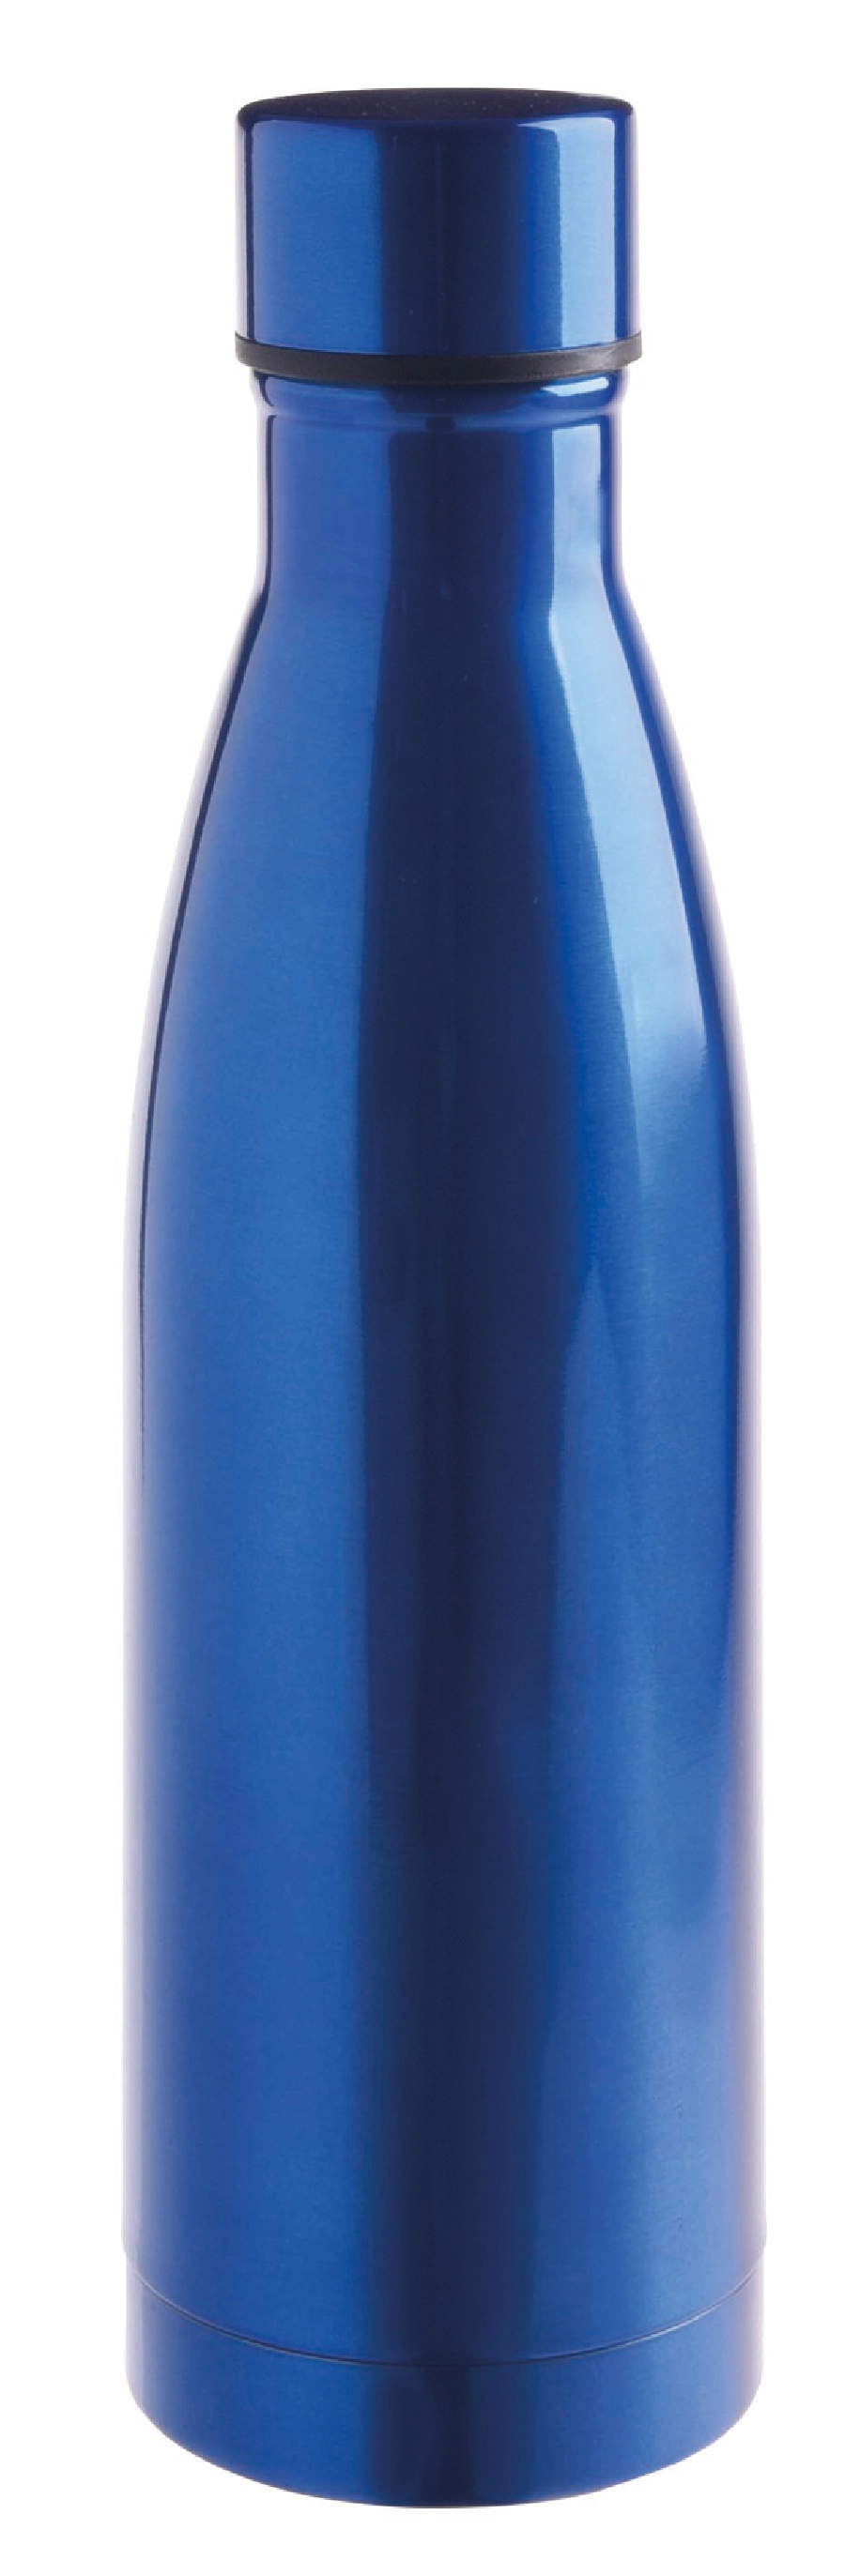 Butelka próżniowa LEGENDY, niebieski 56-0304553